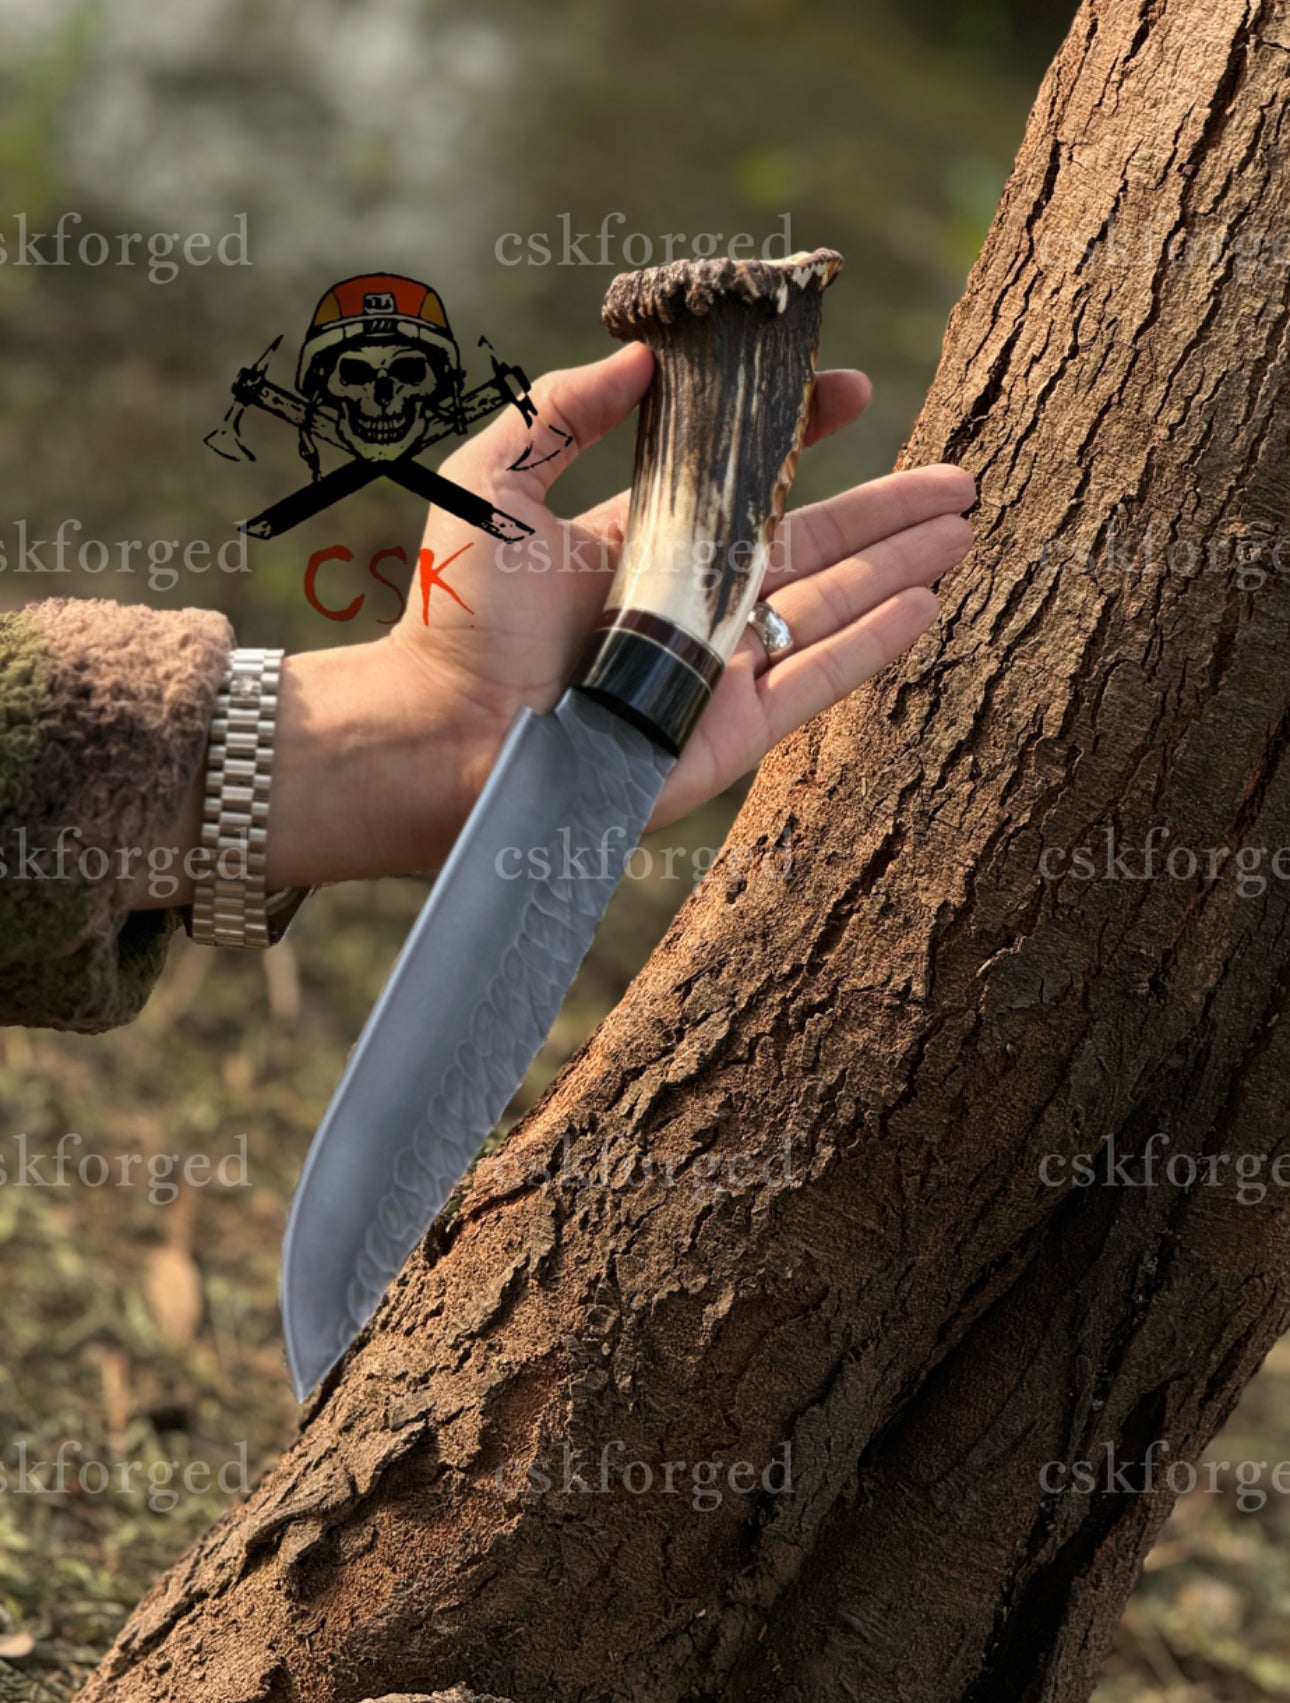 Custom Handmade Stone Texture Hand Forged 1095 High Carbon Steel Vintage Viking Knife